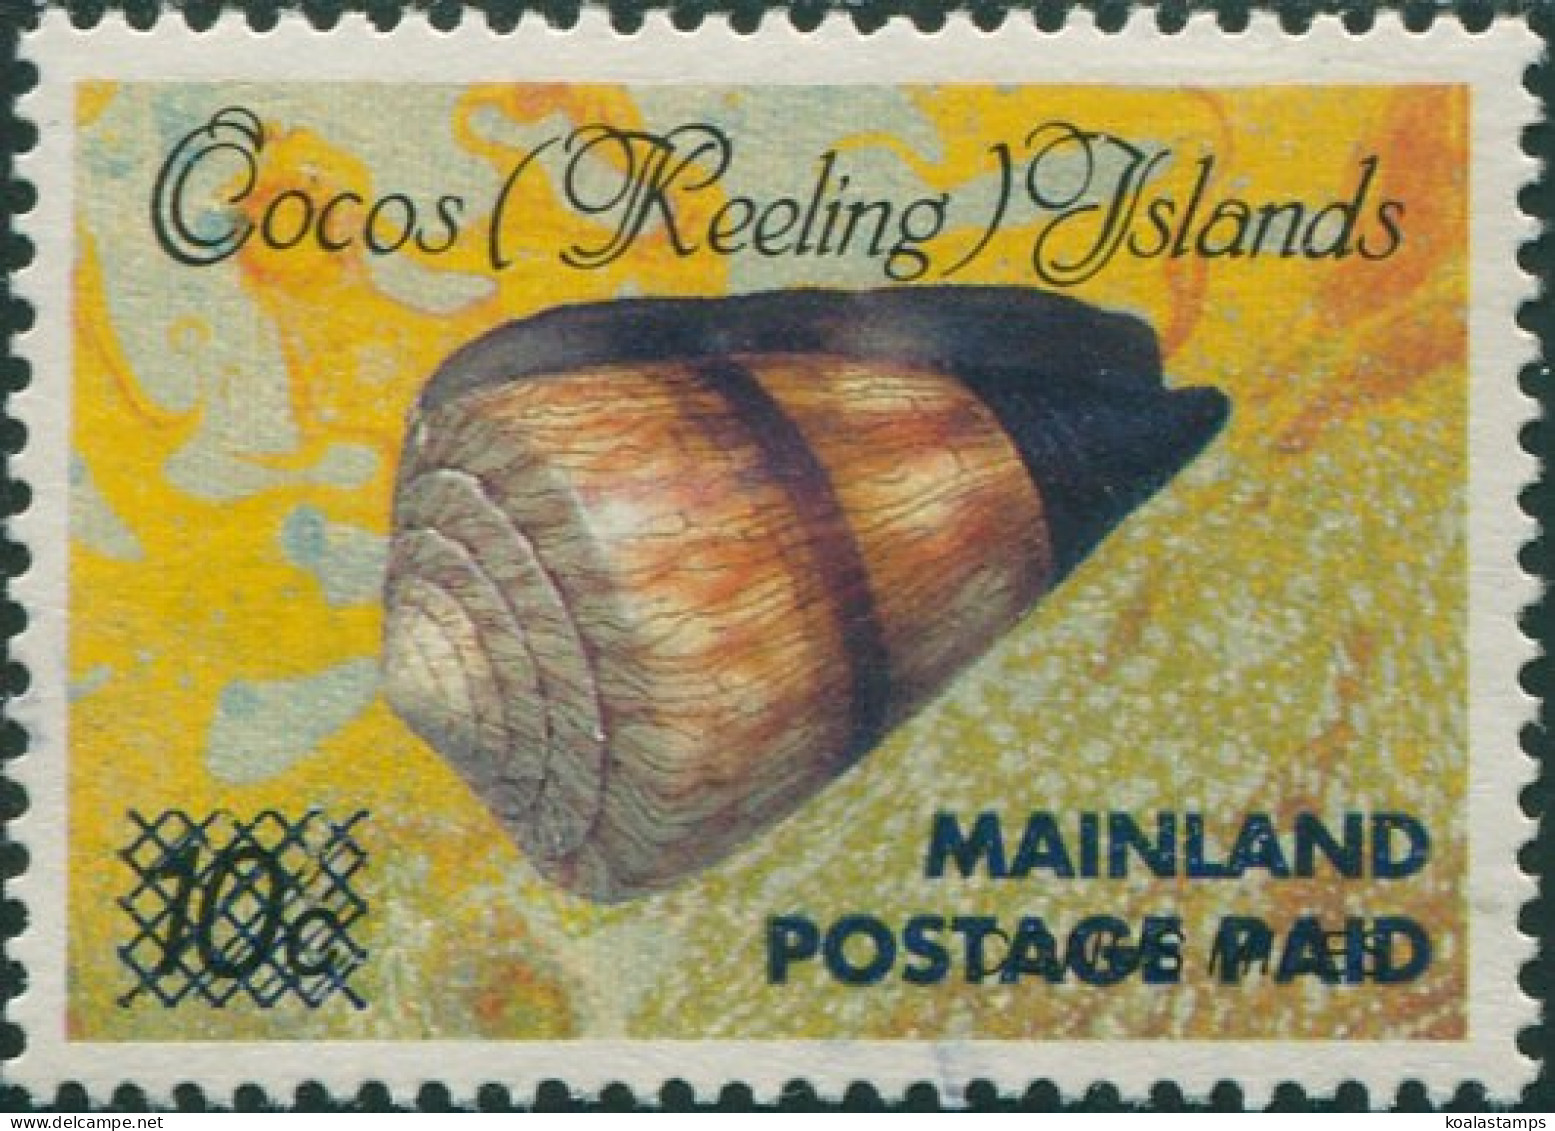 Cocos Islands 1990 SG235 POSTAGE PAID Cone Shell MNH - Kokosinseln (Keeling Islands)